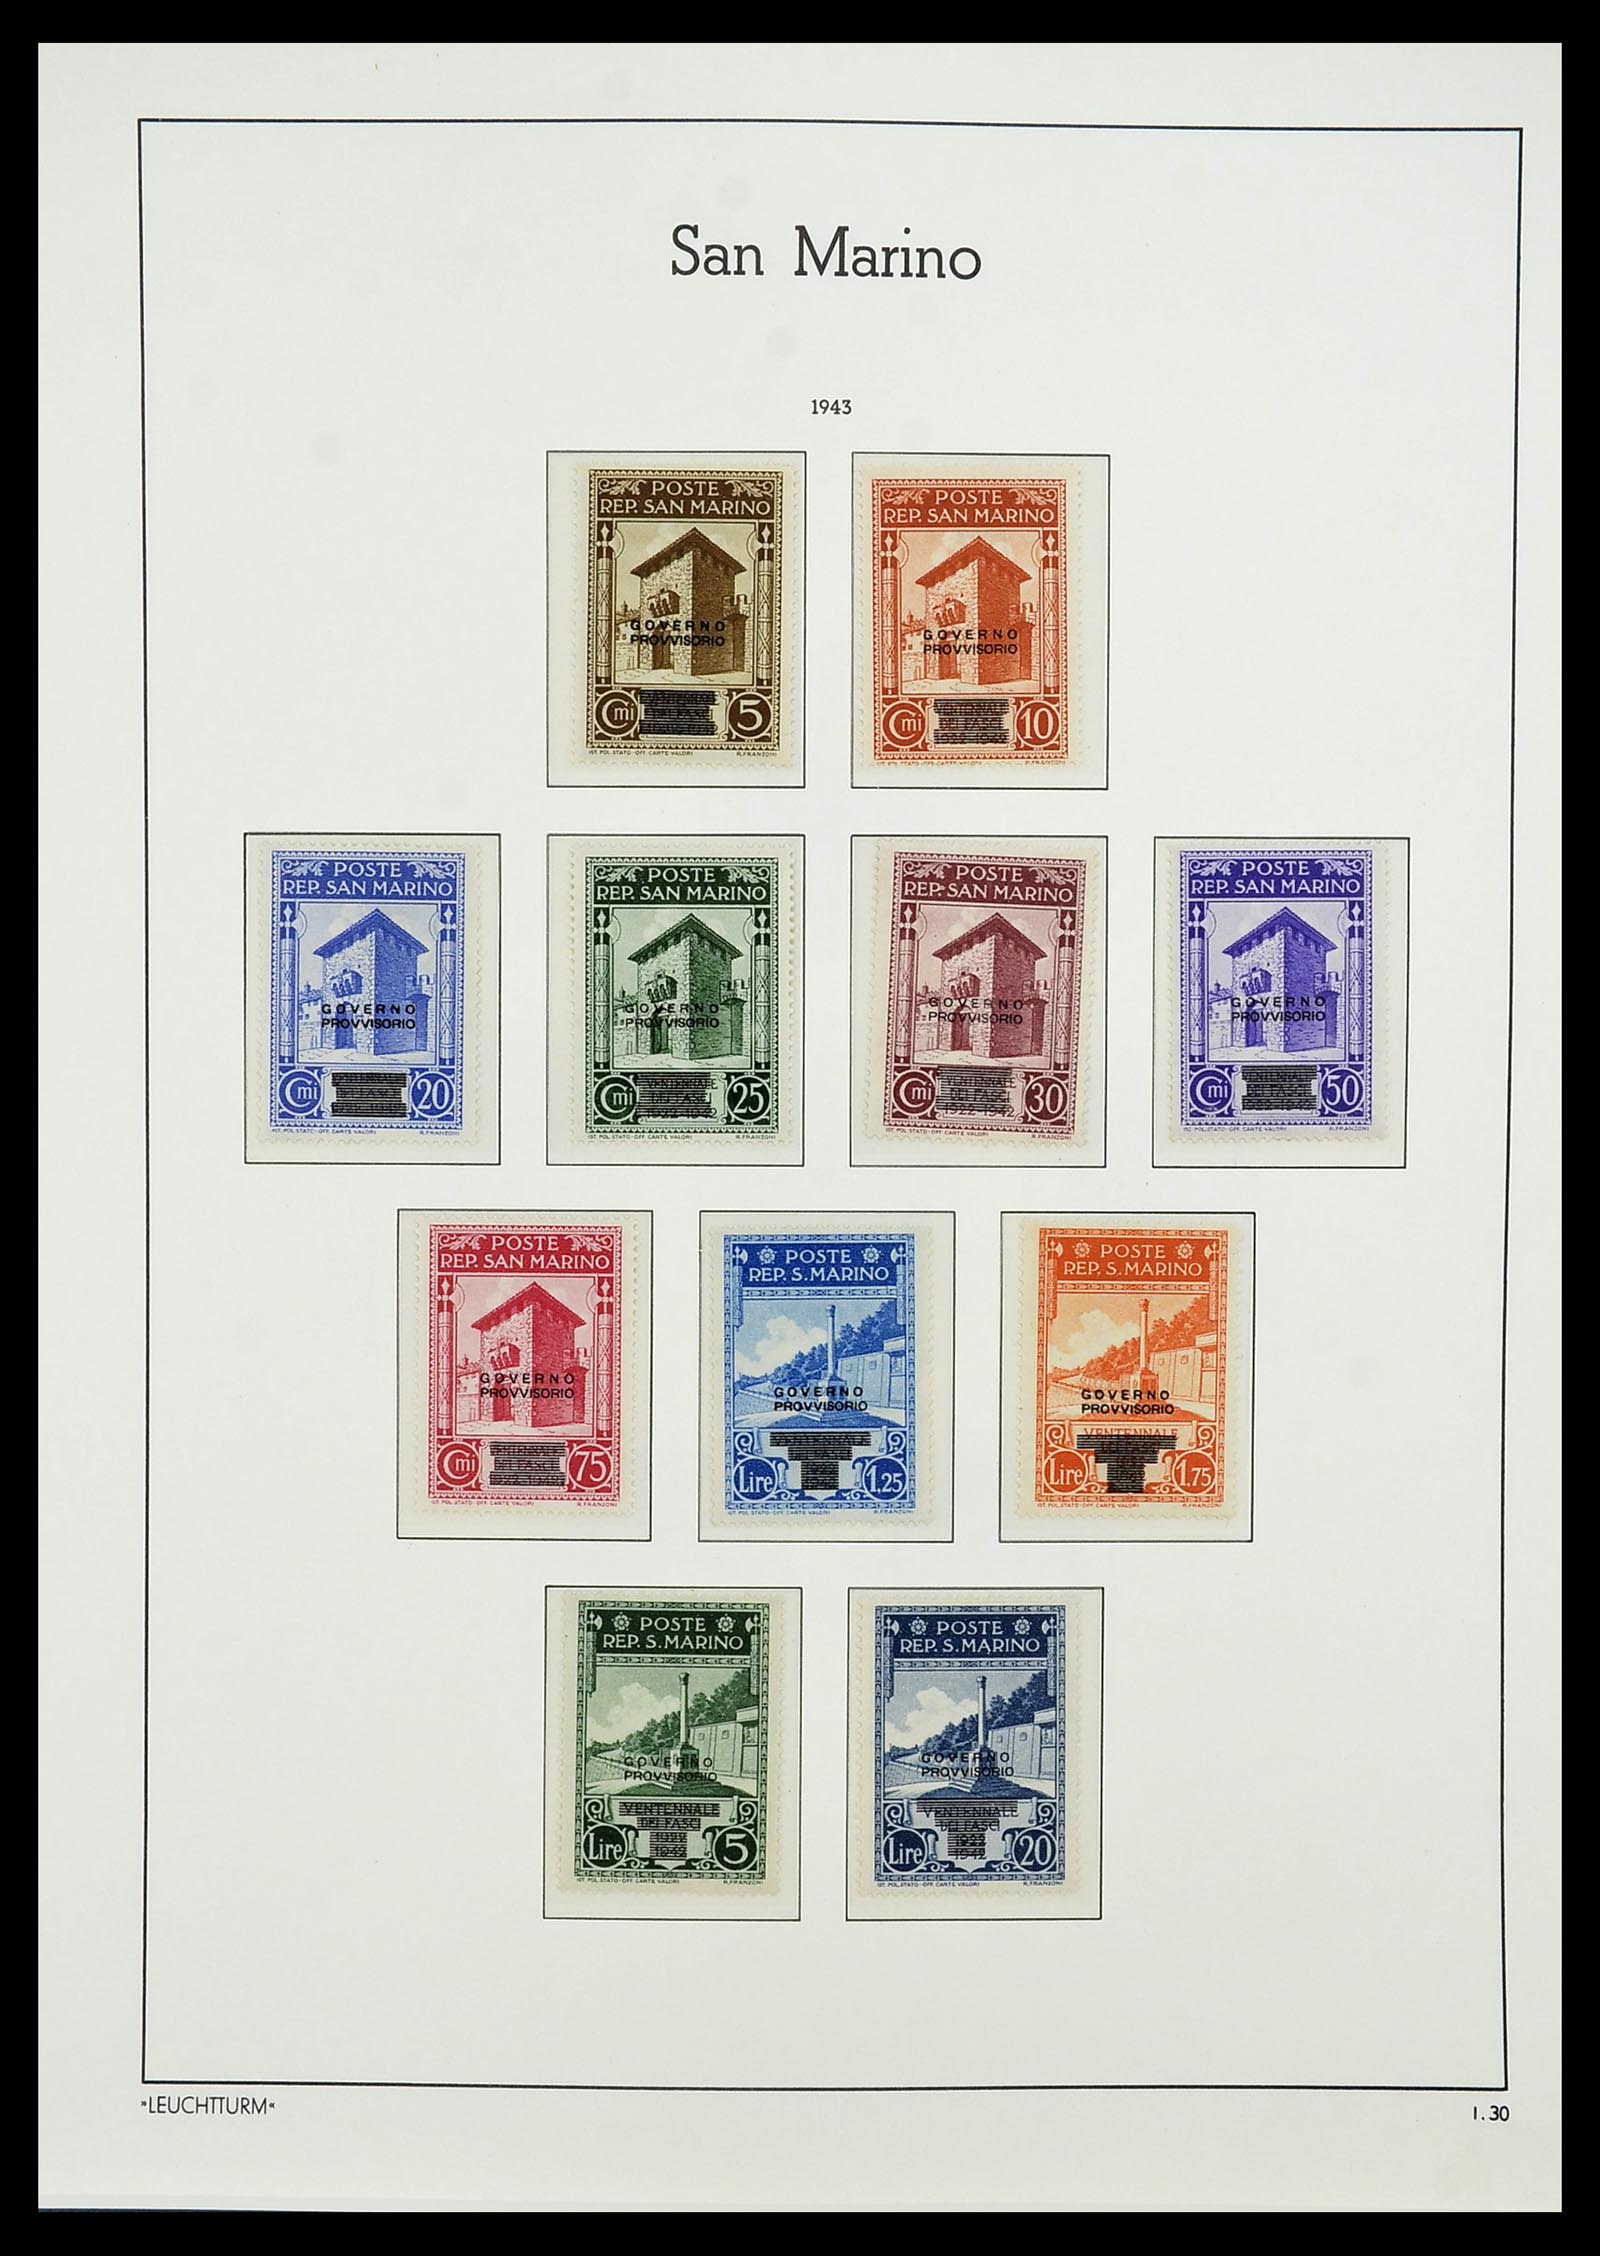 34243 032 - Stamp collection 34243 San Marino 1877-2008.